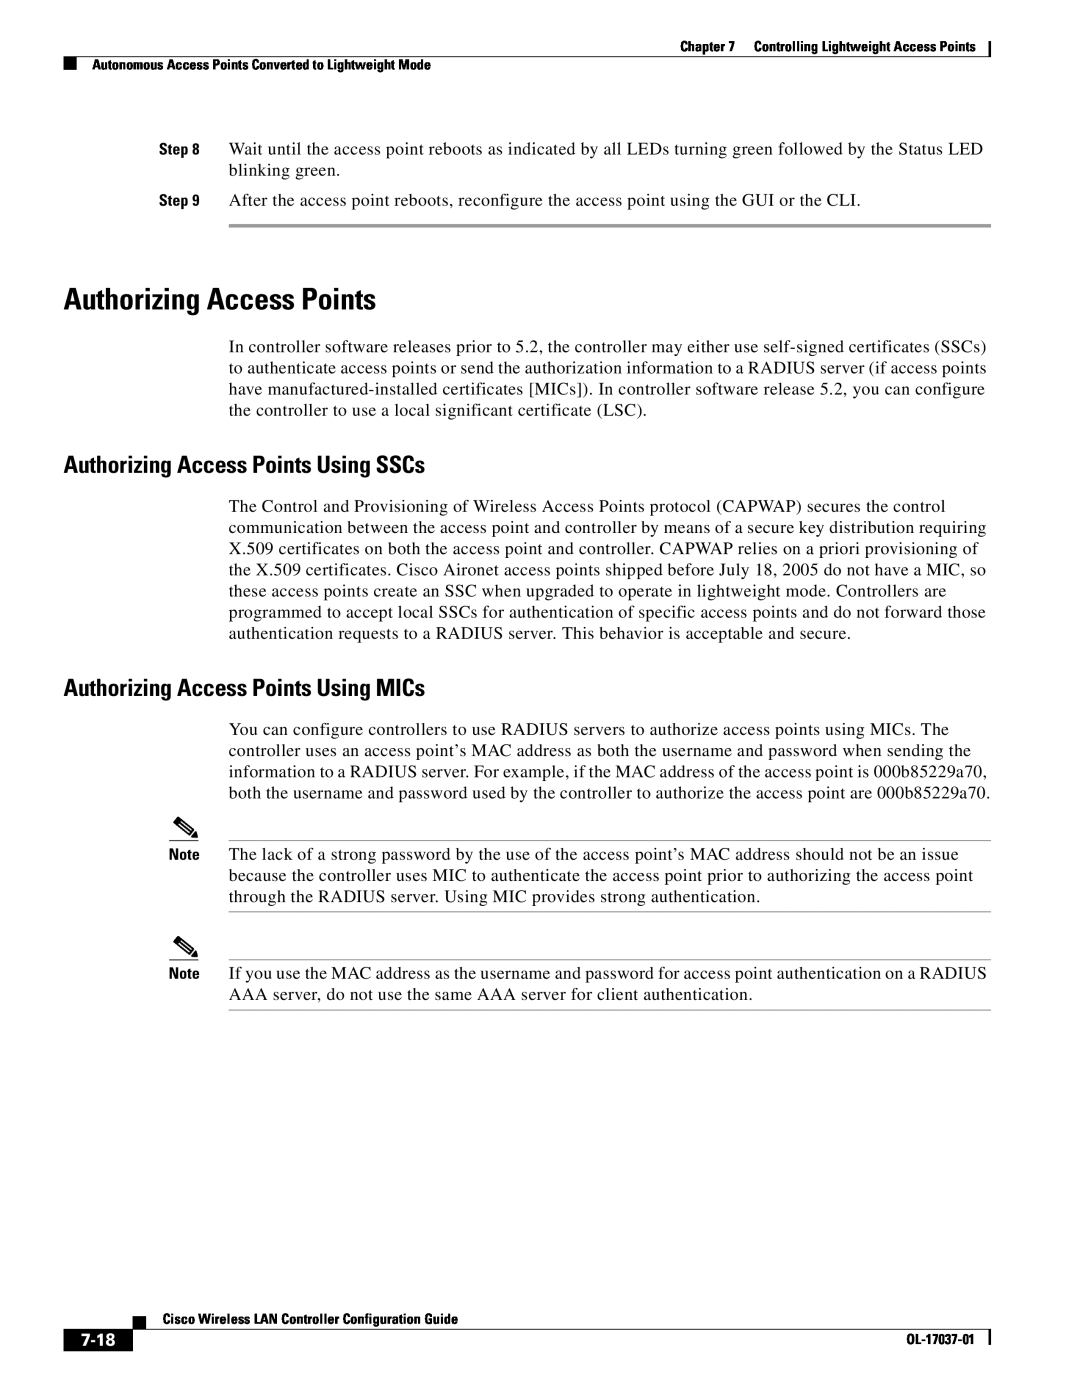 Cisco Systems OL-17037-01 manual Authorizing Access Points Using SSCs, Authorizing Access Points Using MICs, 7-18 